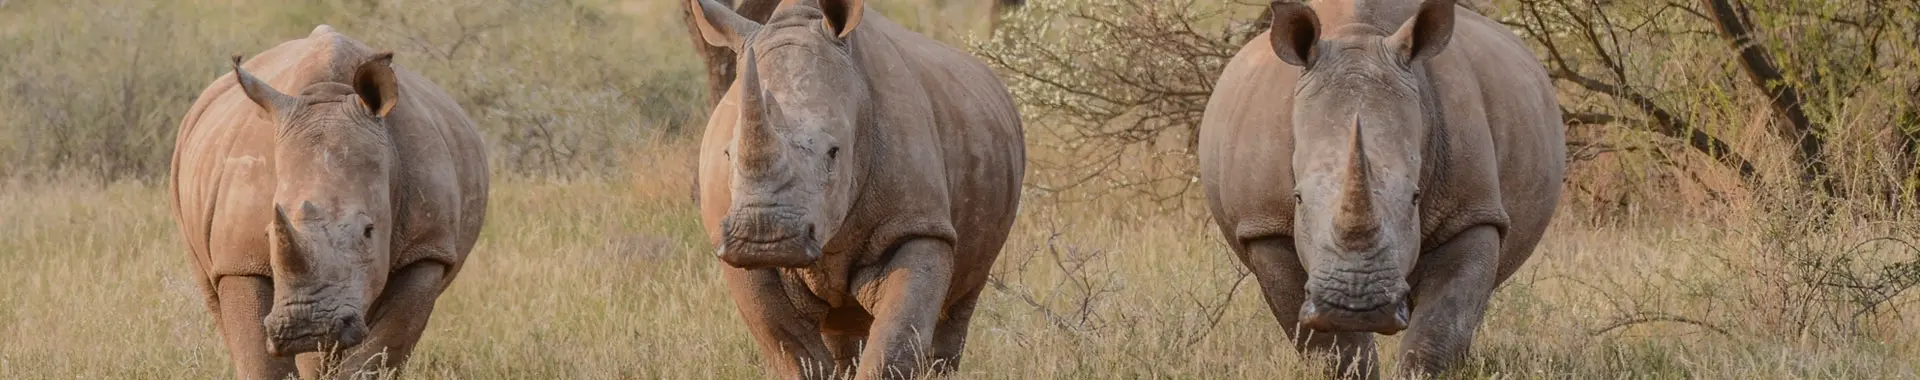 Сафари с носорогами в Танзании